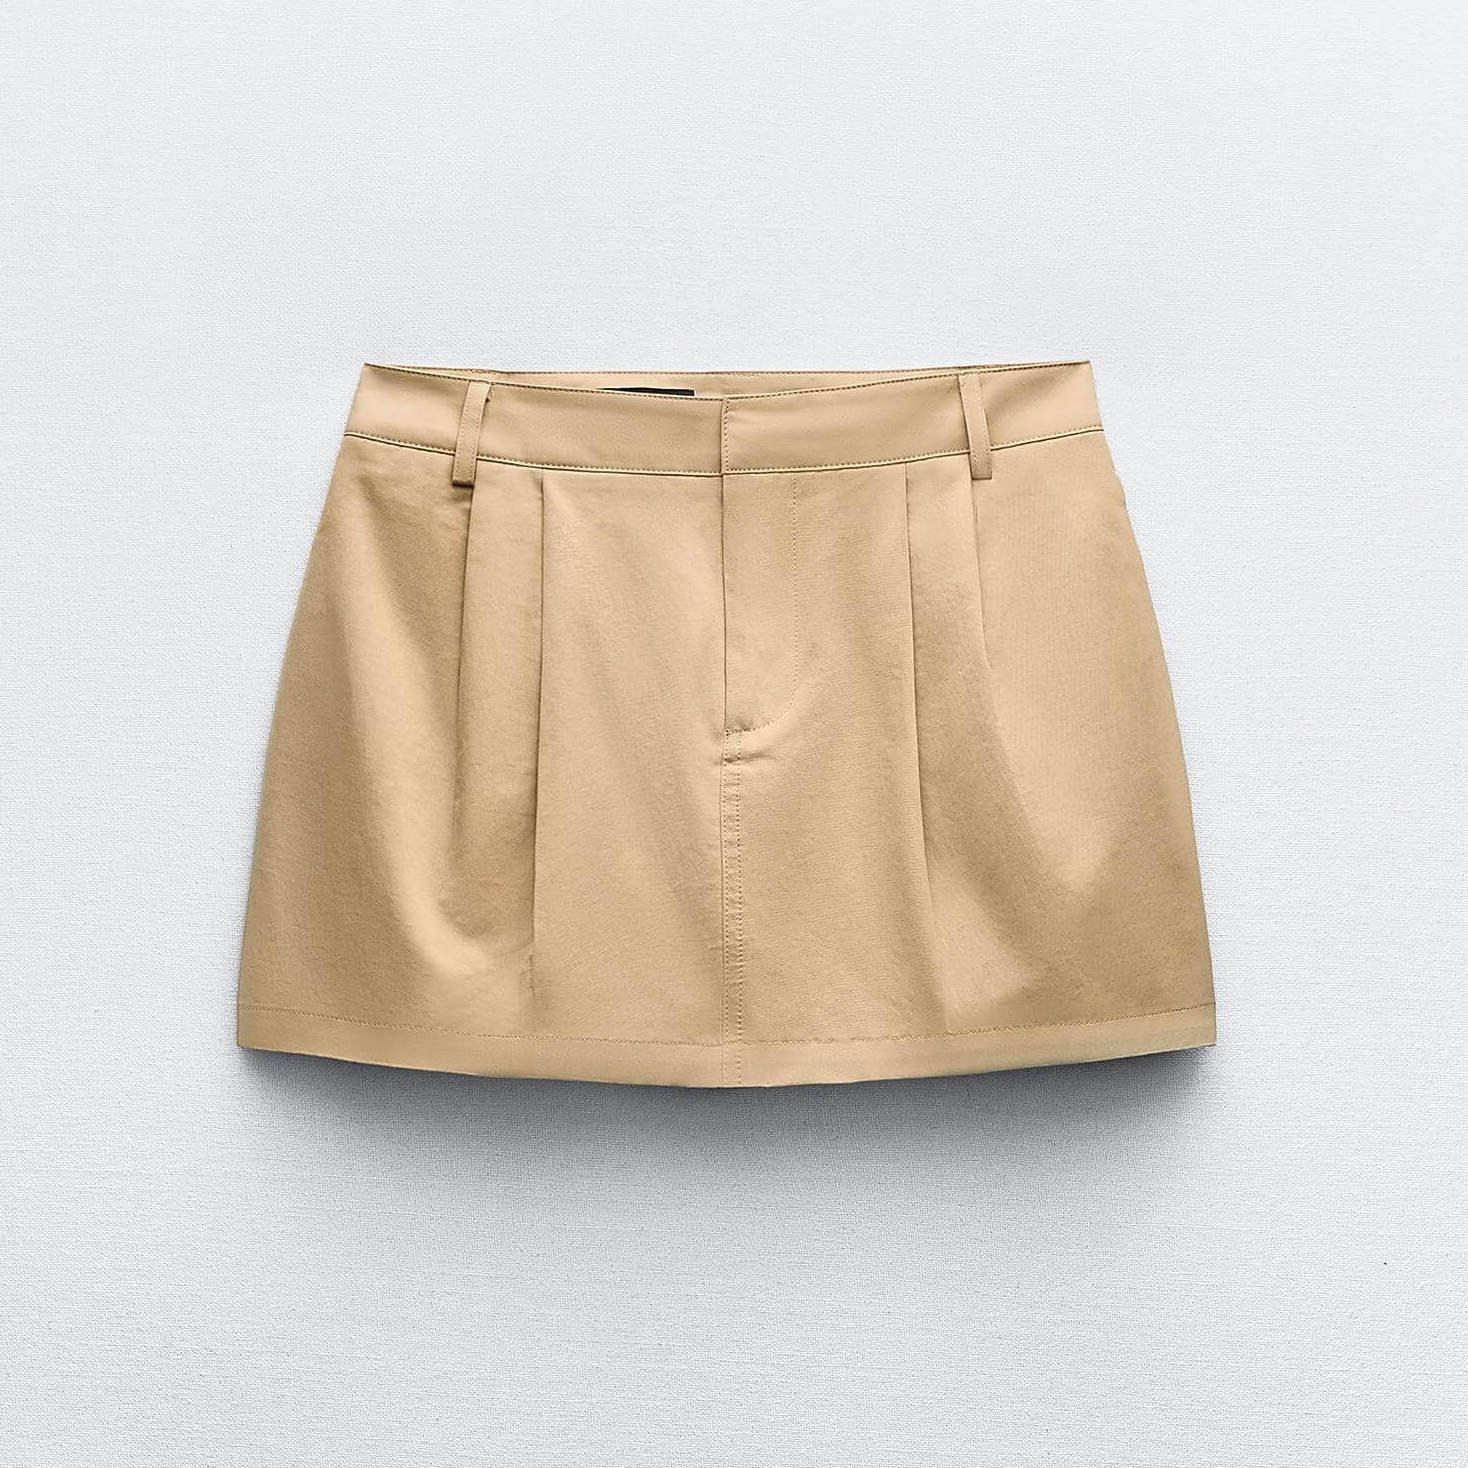 Юбка-мини Zara Pleated, желто-коричневый юбка zara laminated printed pleated золотистый